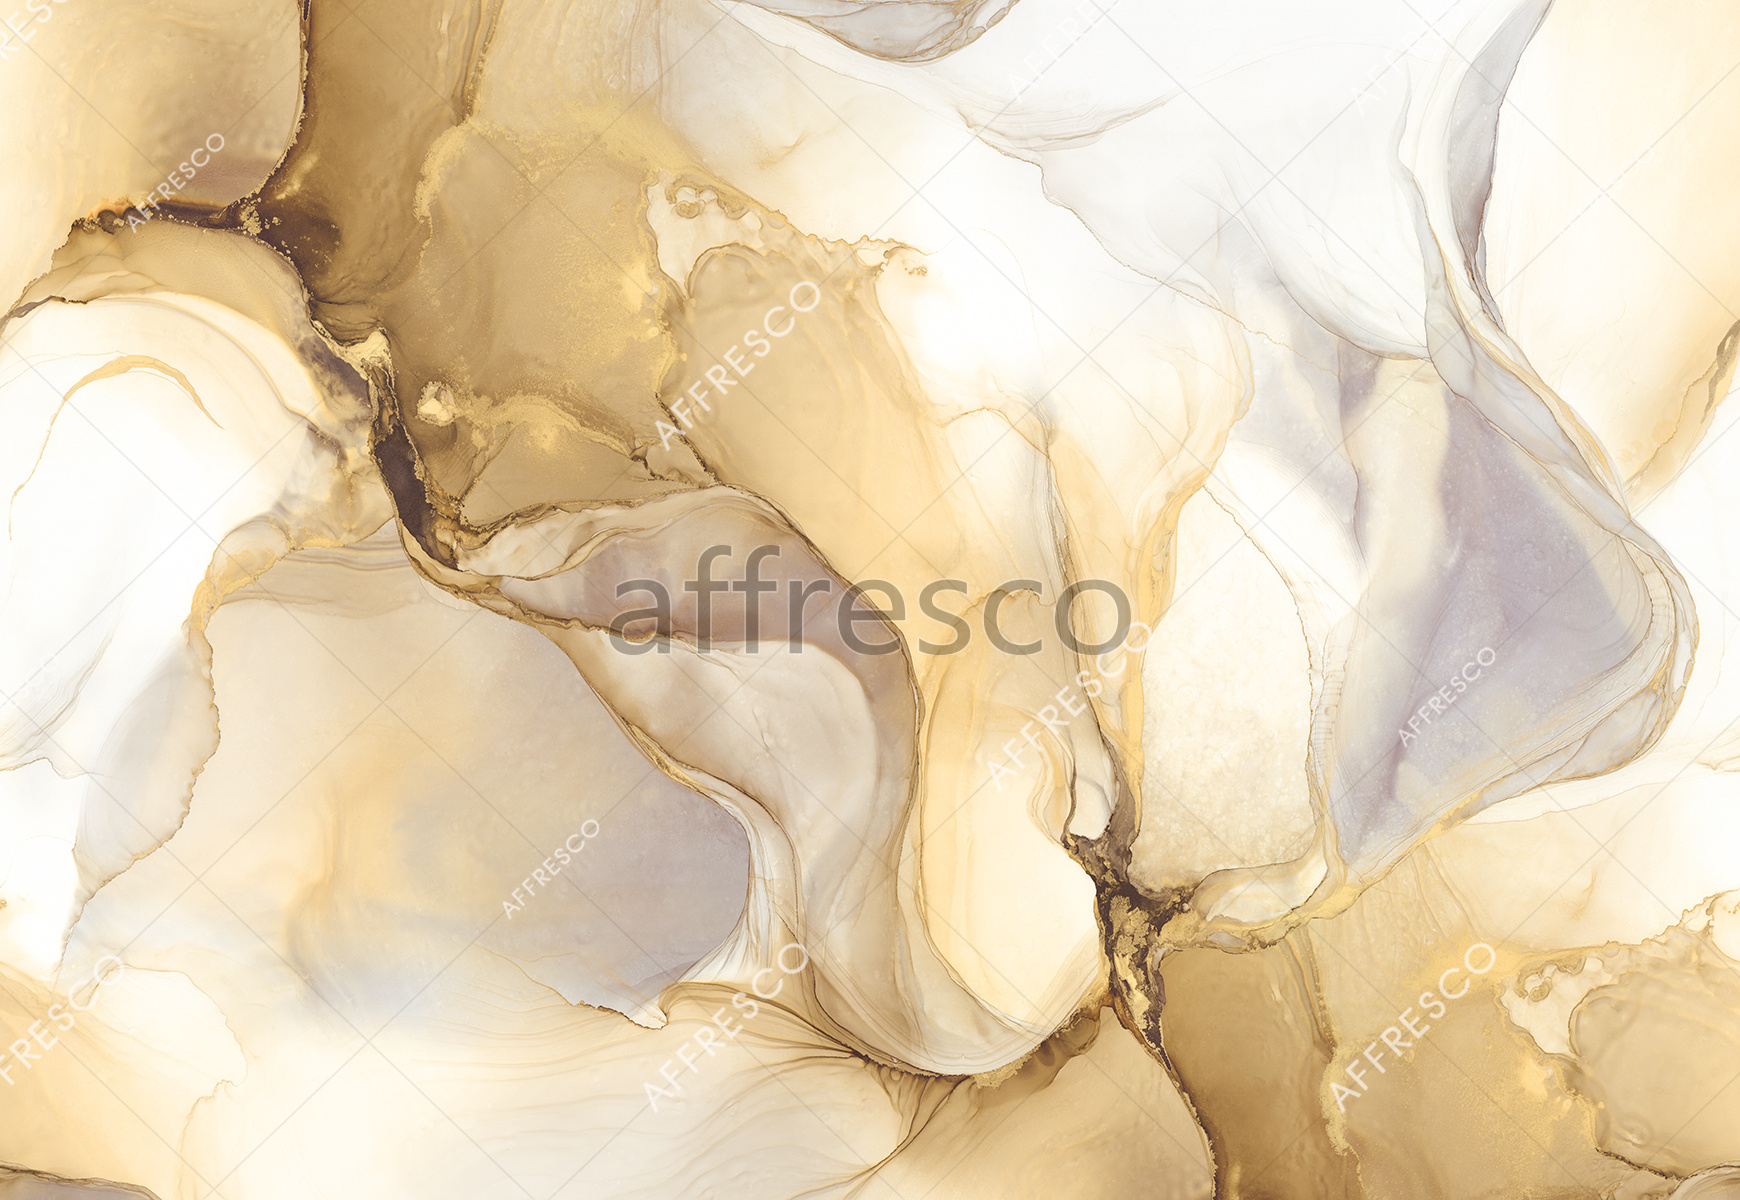 ID138733 | Textures |  | Affresco Factory